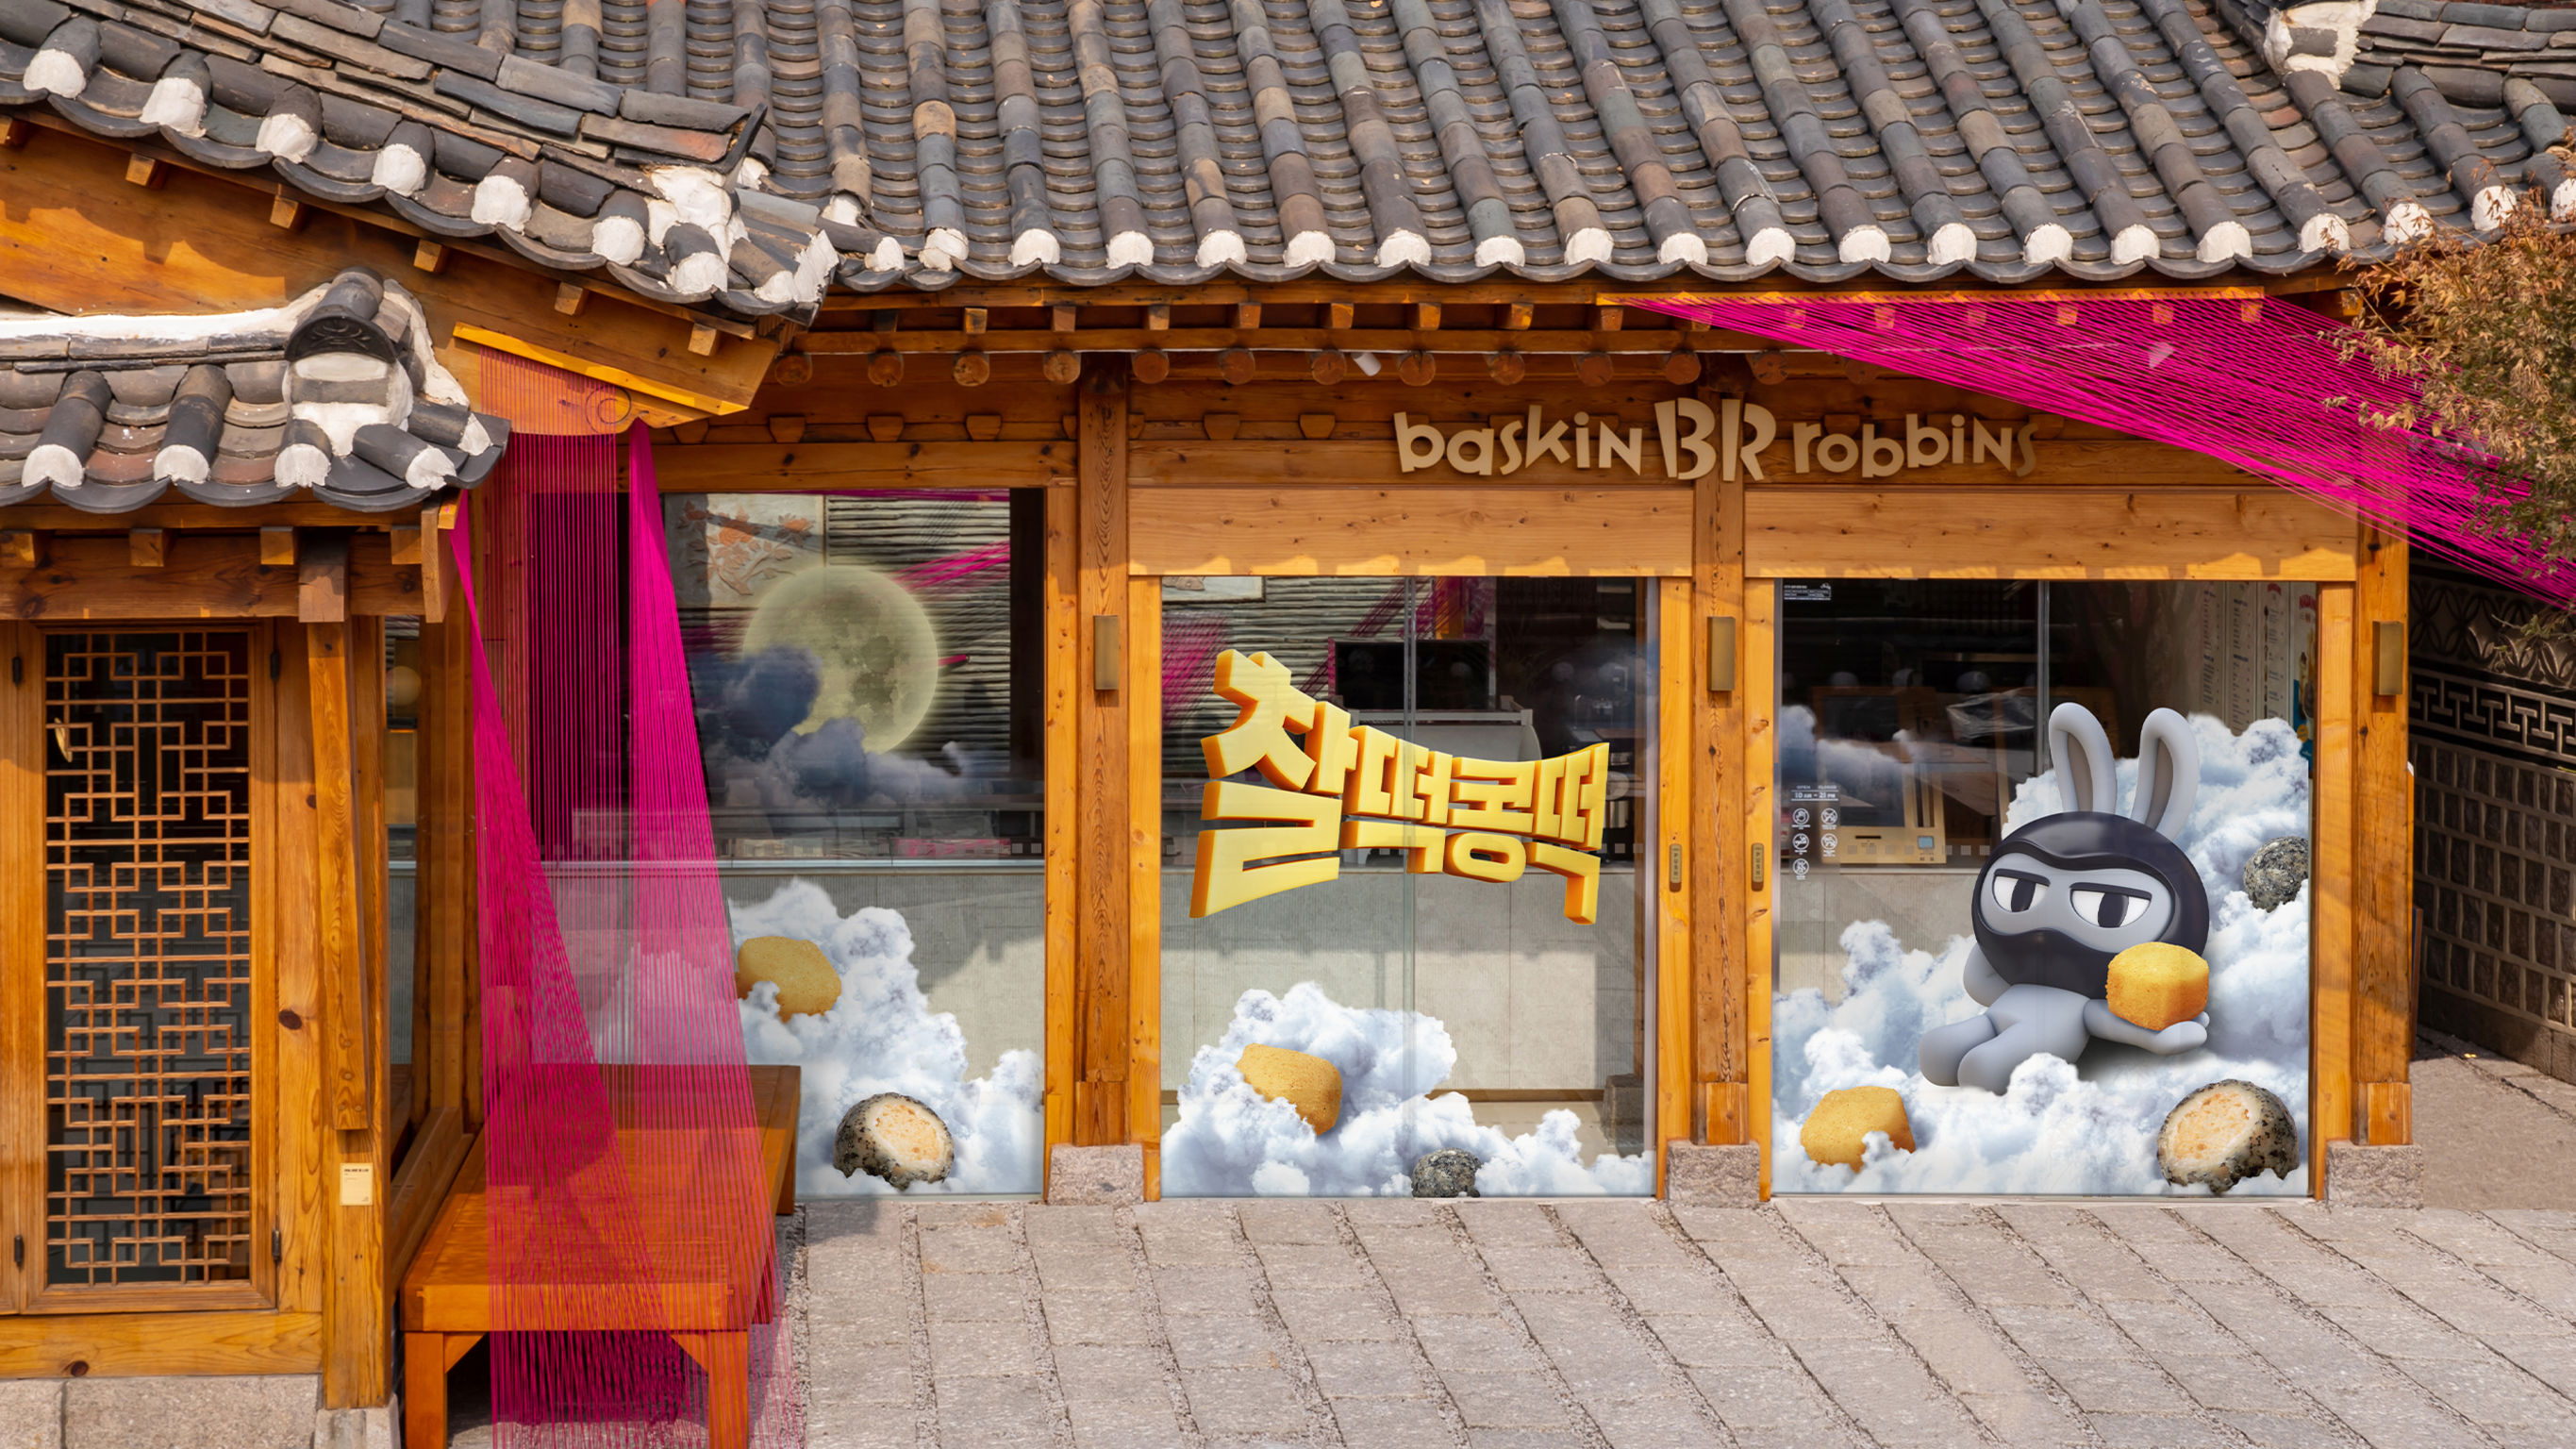 Baskin Robbins - CHALTTEOK-KONGTTEOK Campaign